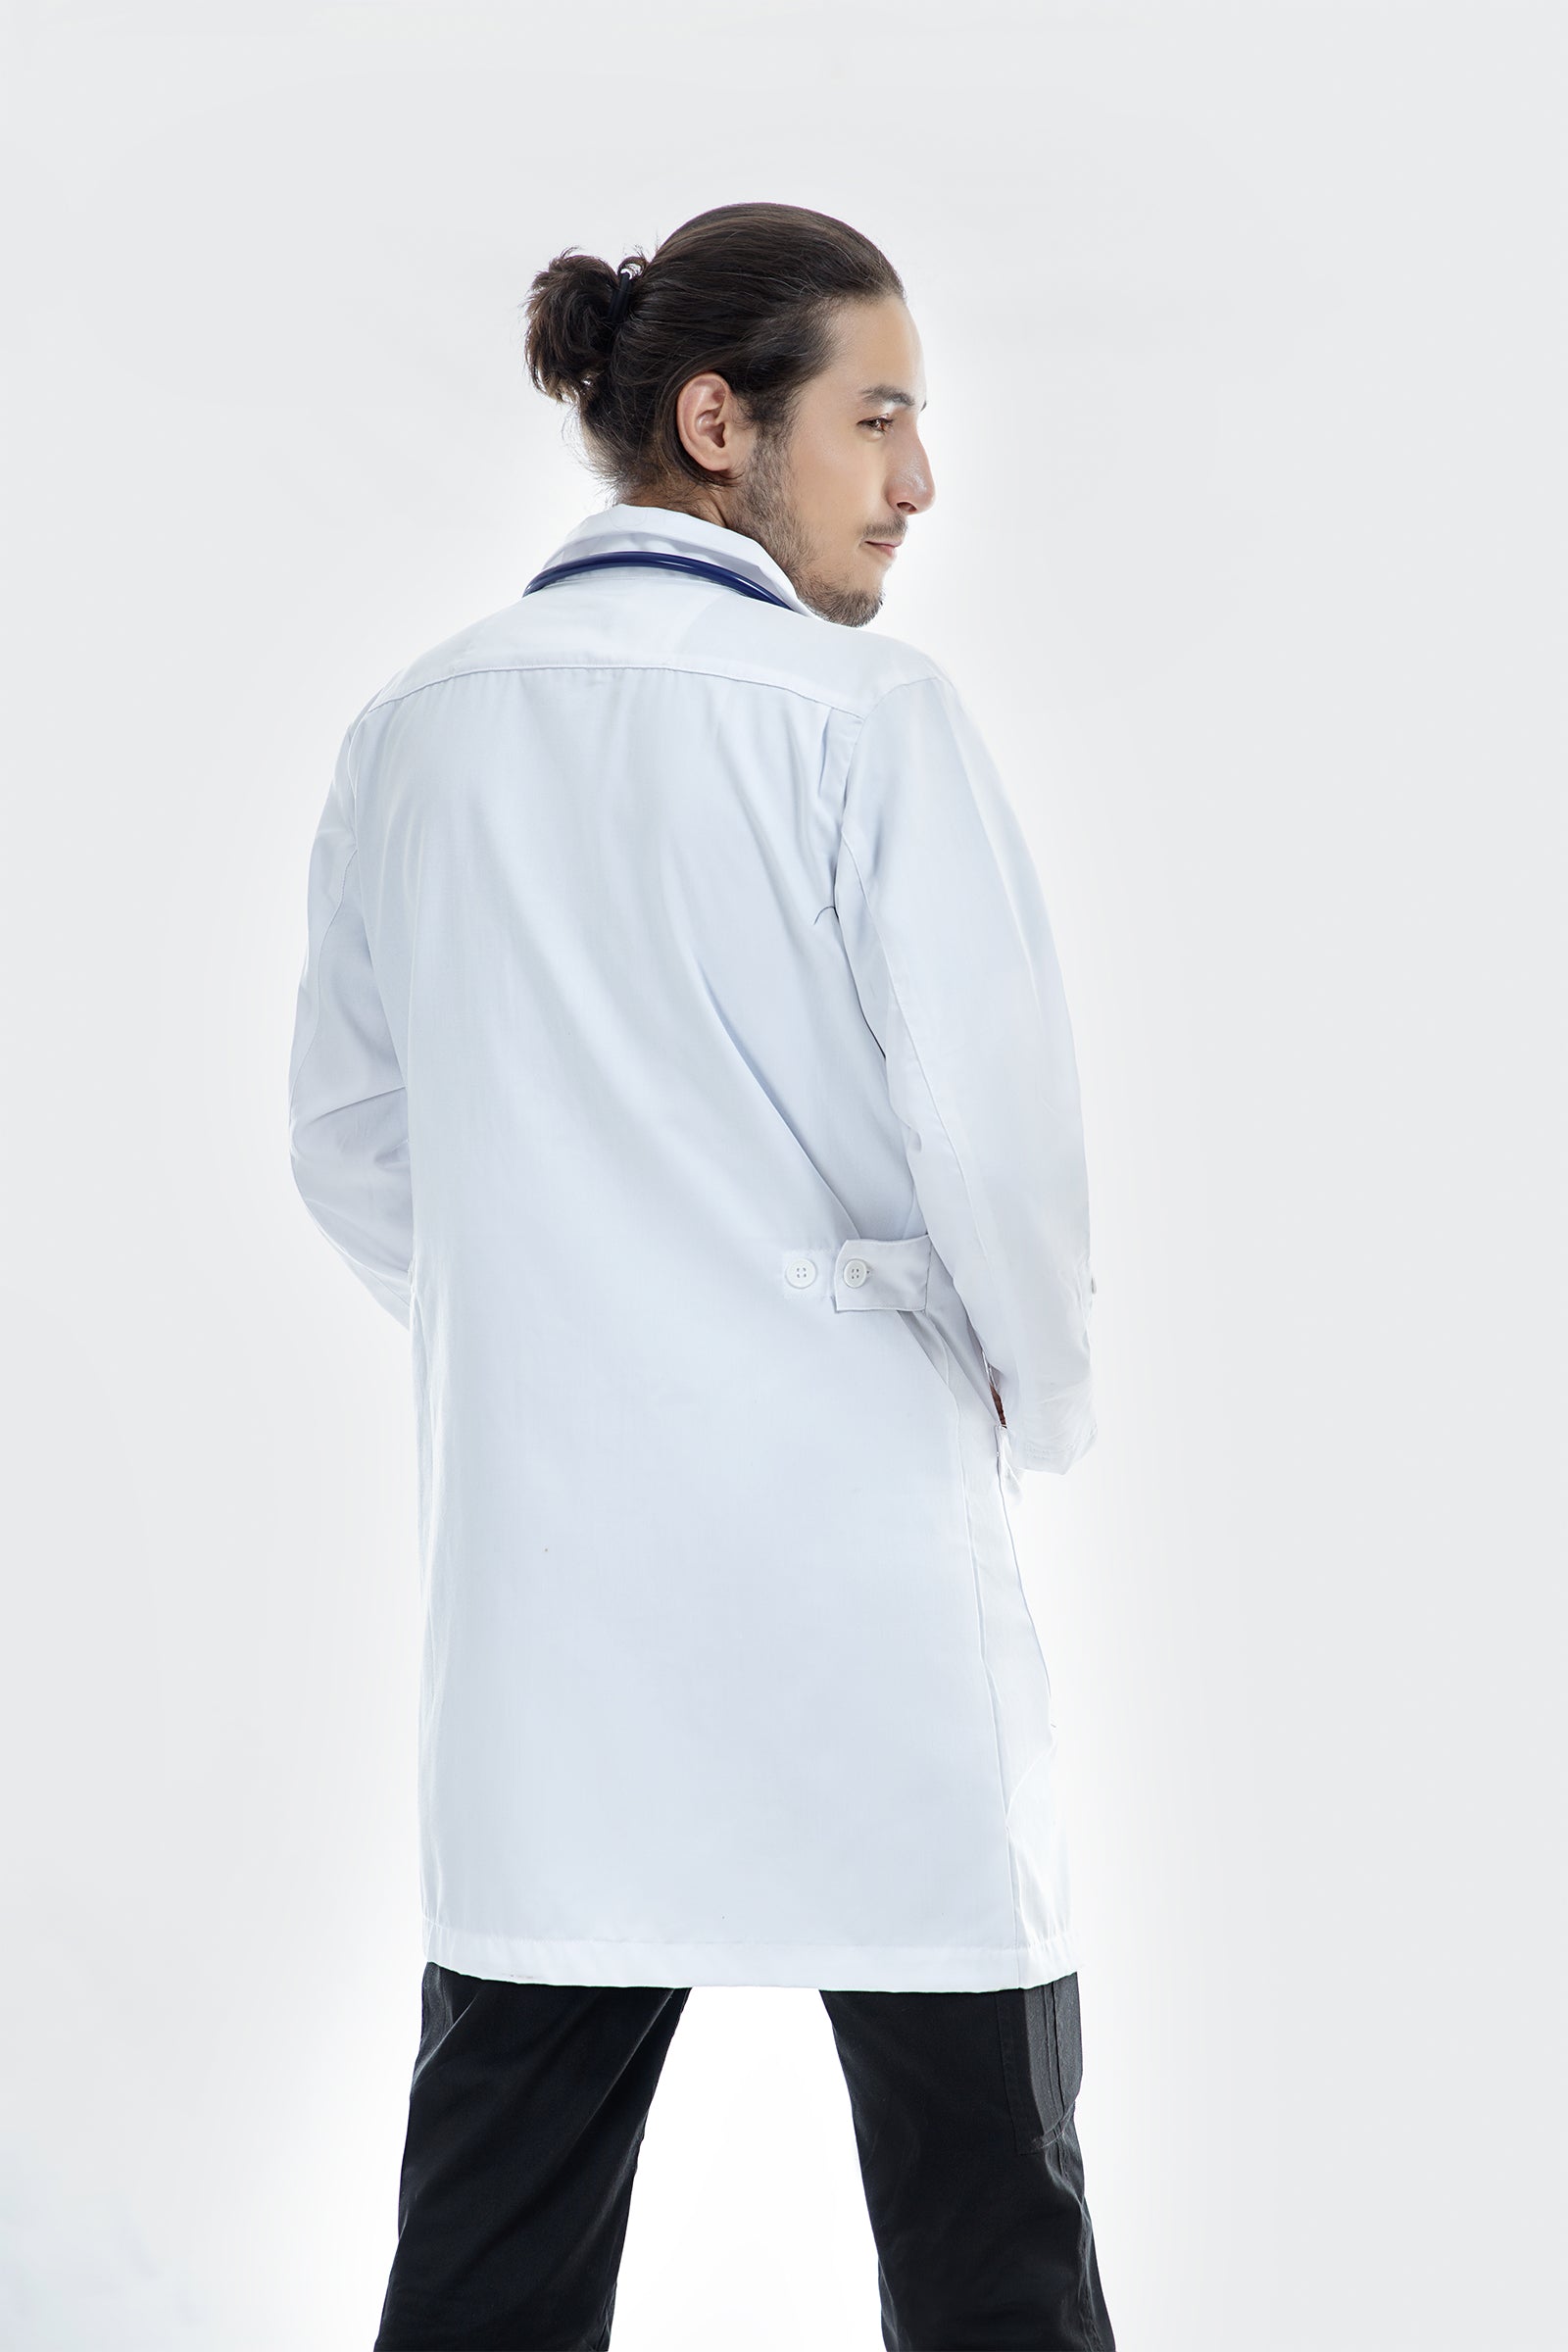 Cloud White lab coat